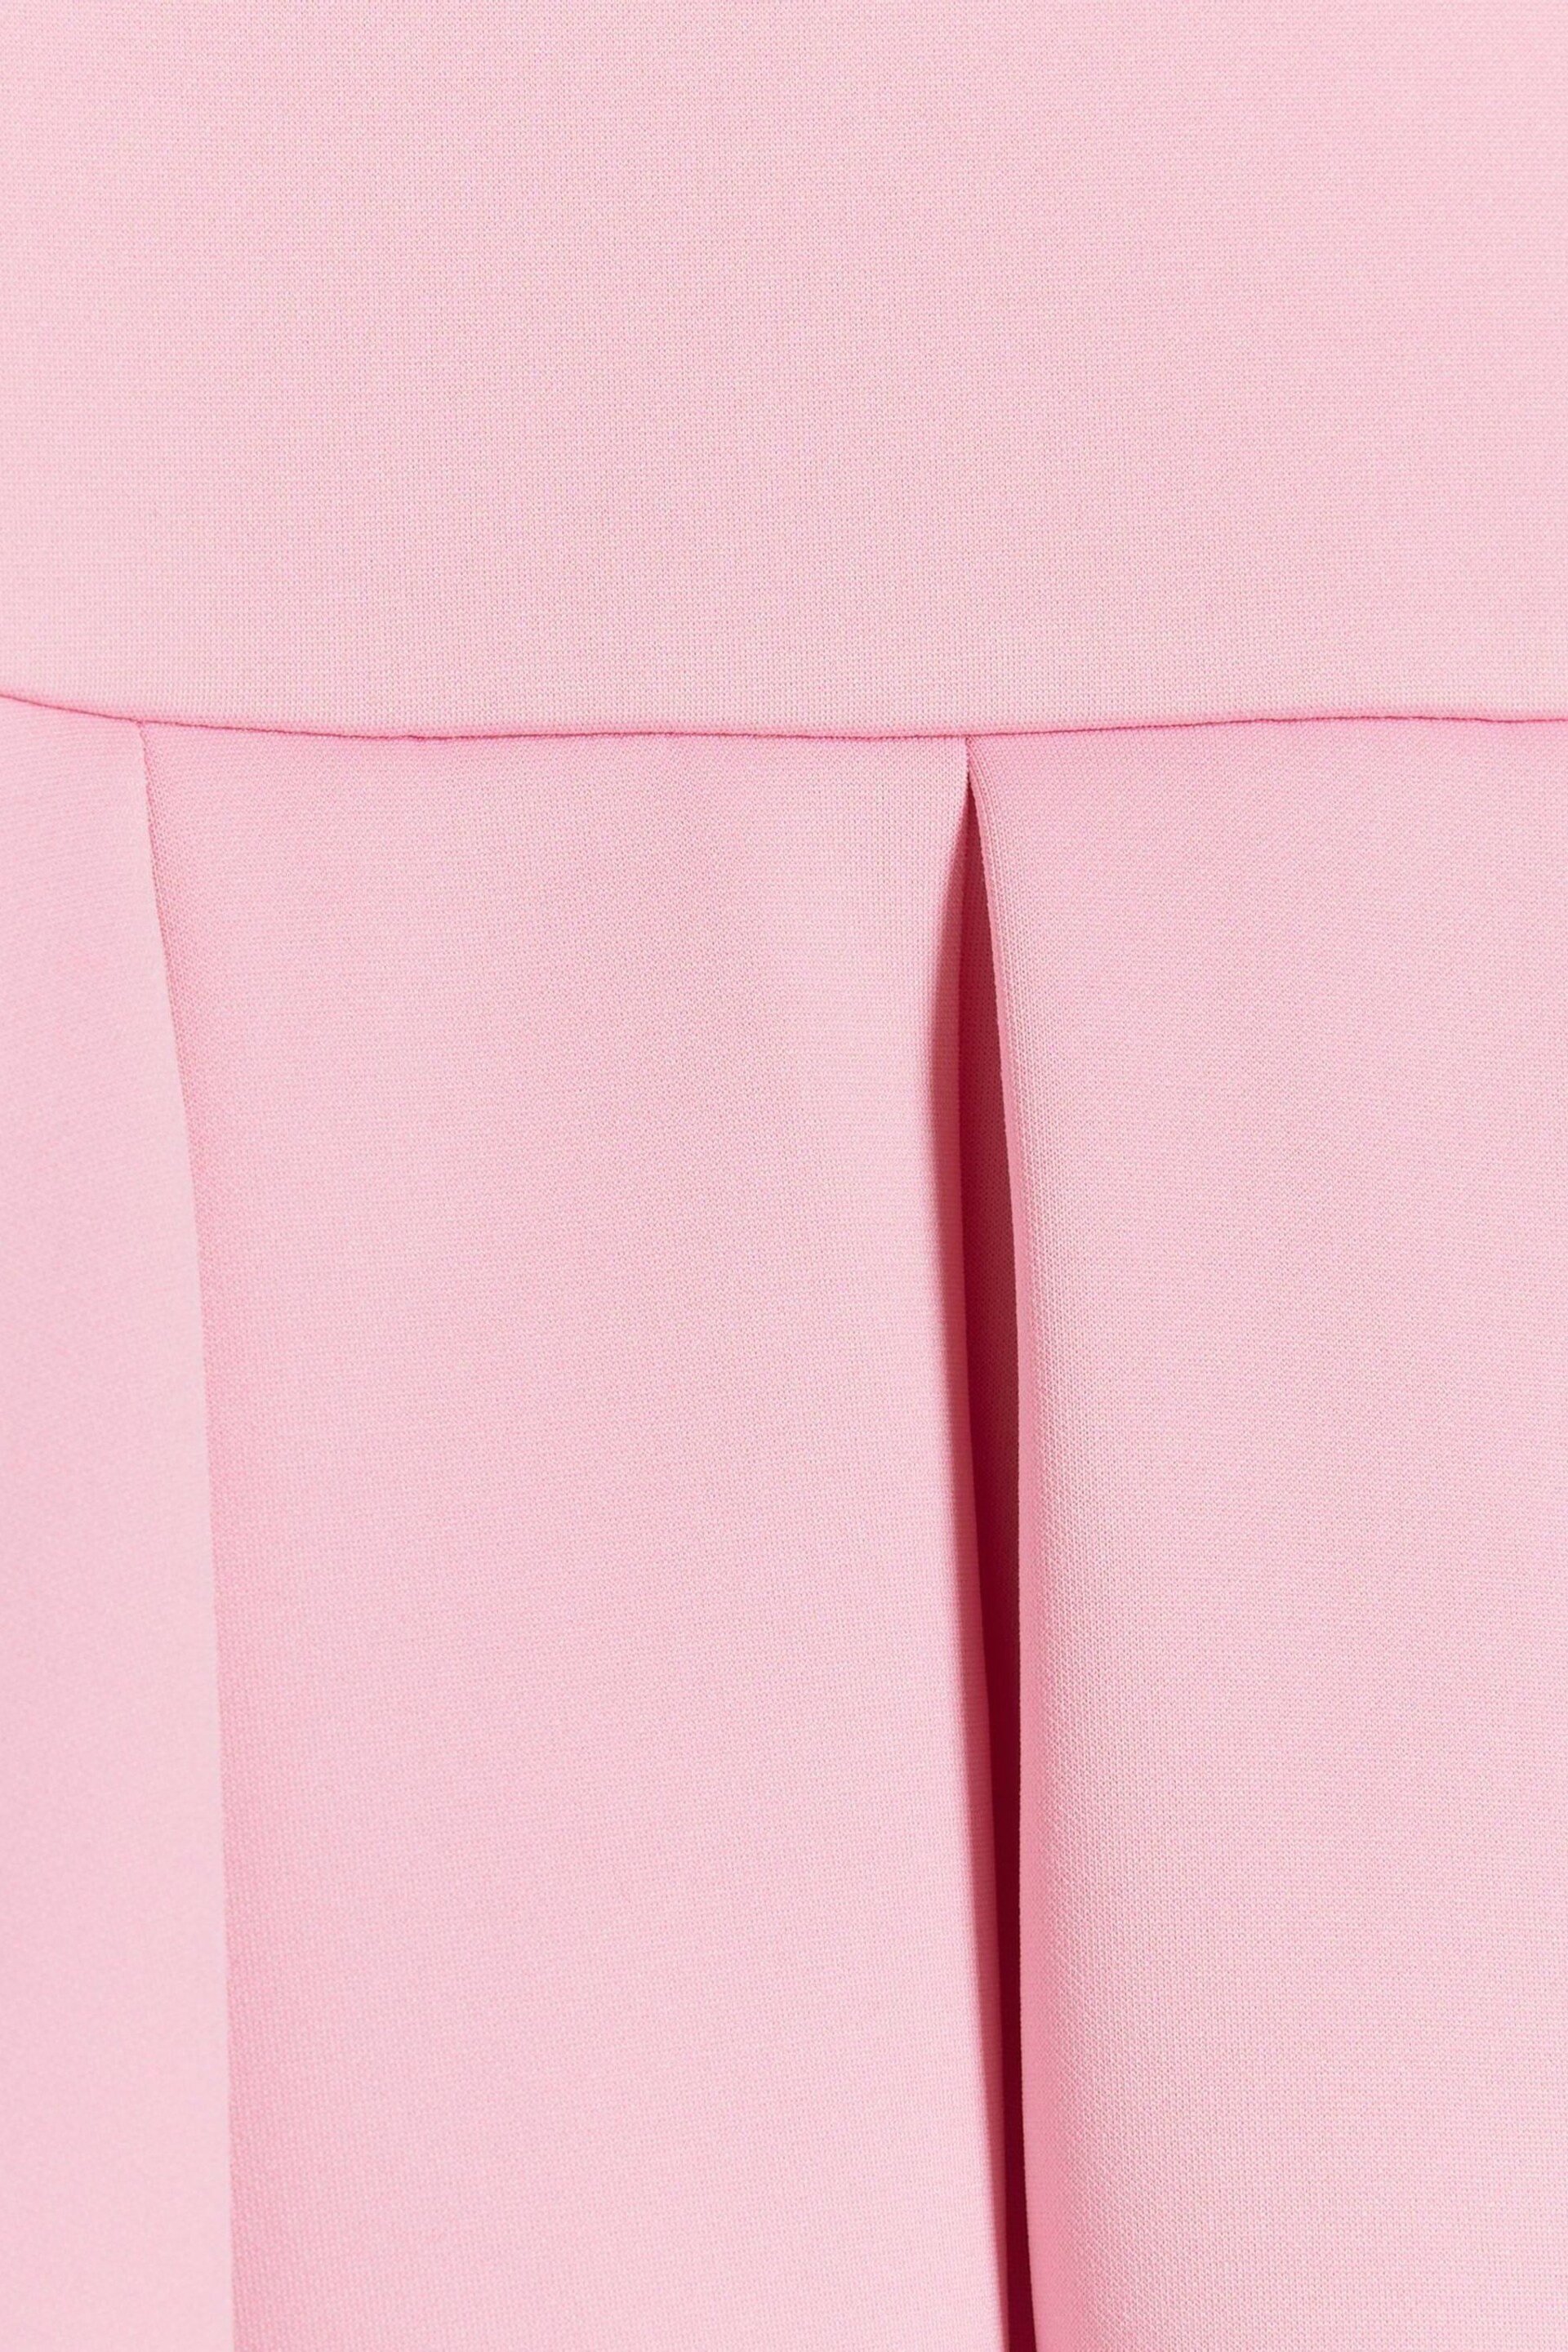 River Island Pink Girls Plain Scuba Dress - Image 4 of 4